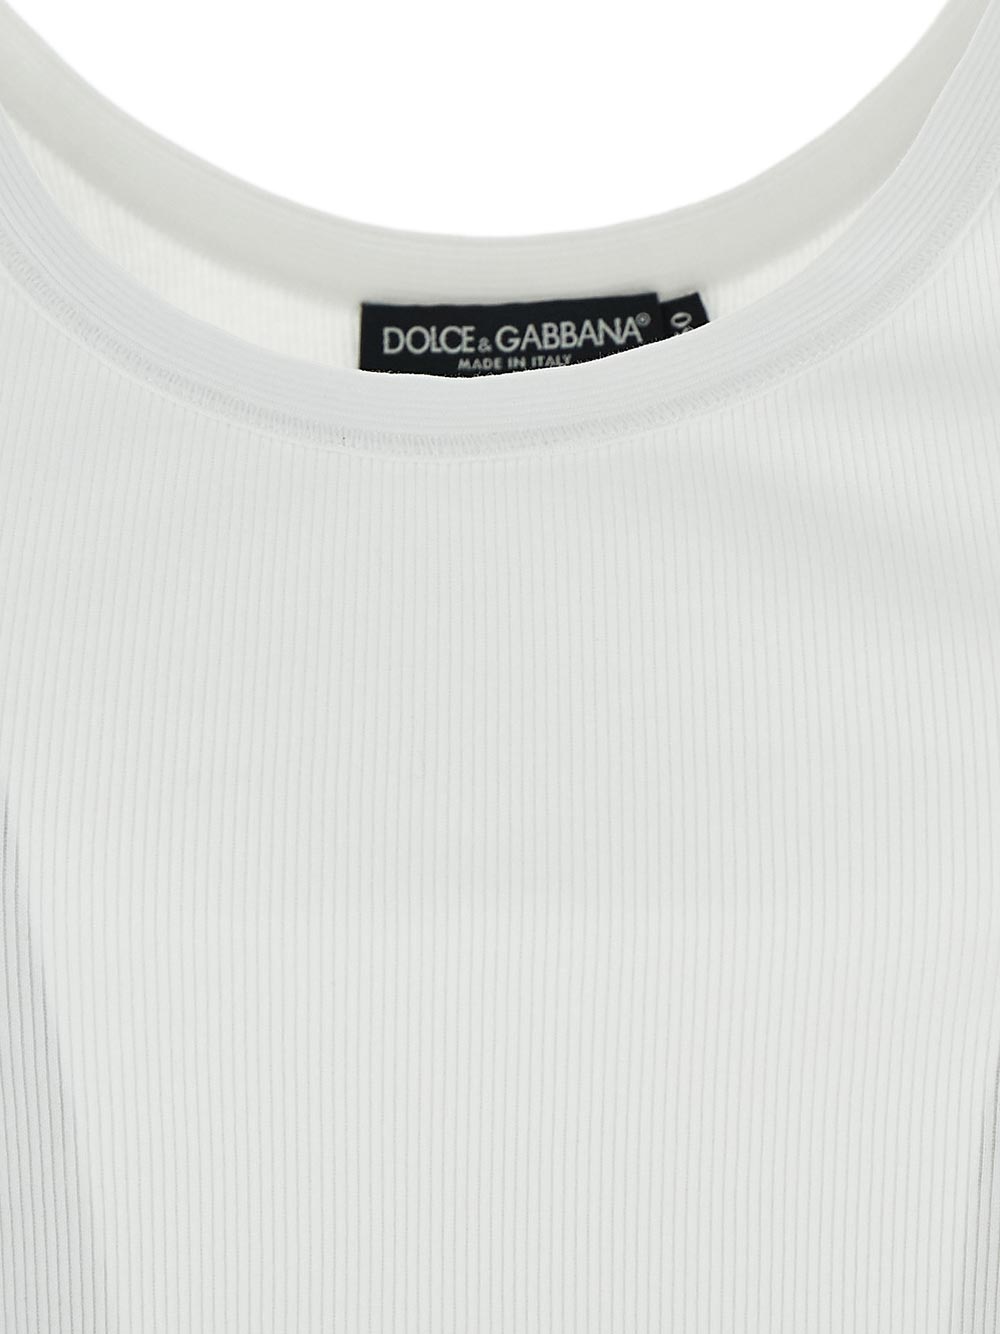 Dolce & Gabbana Fine-Rib Washed Cotton Singlet